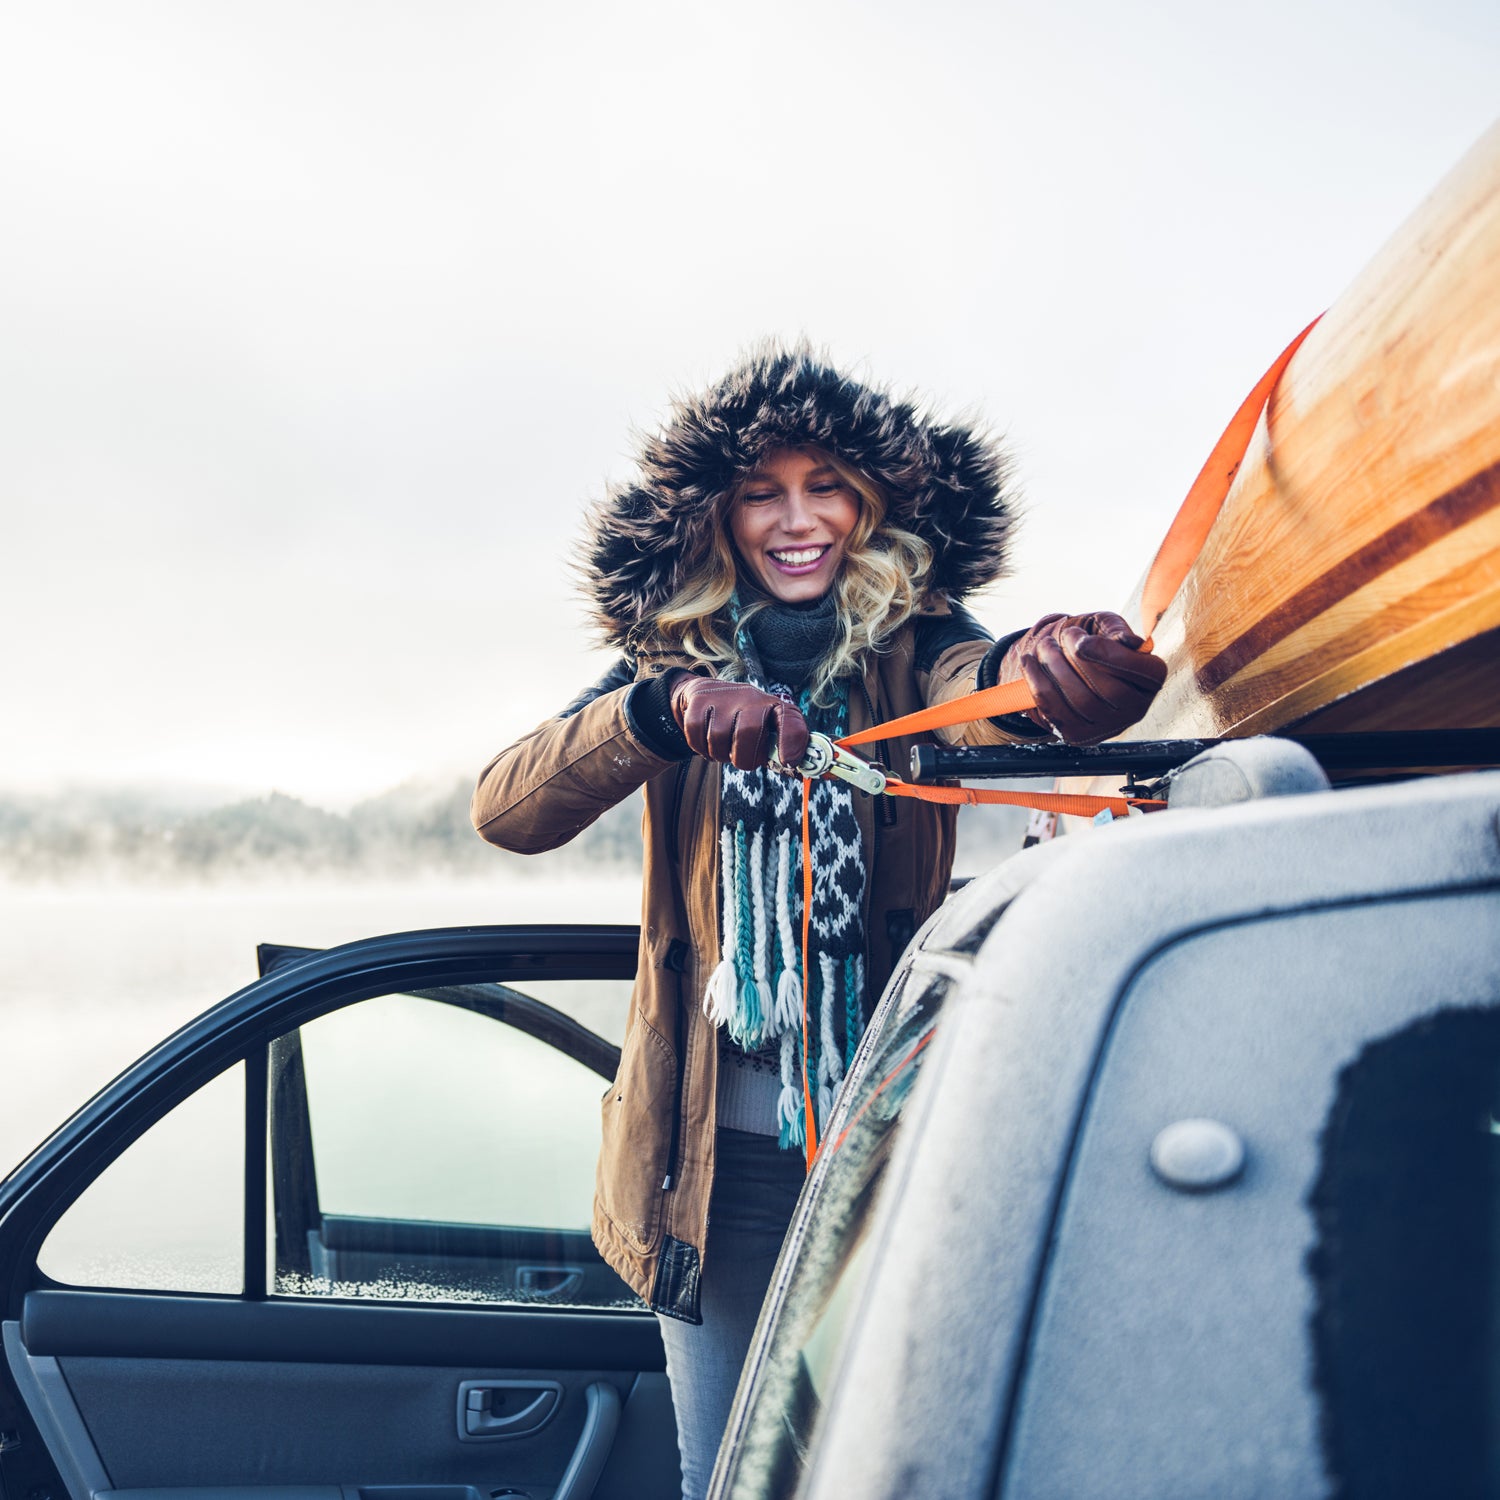 Car essentials for winter travel 